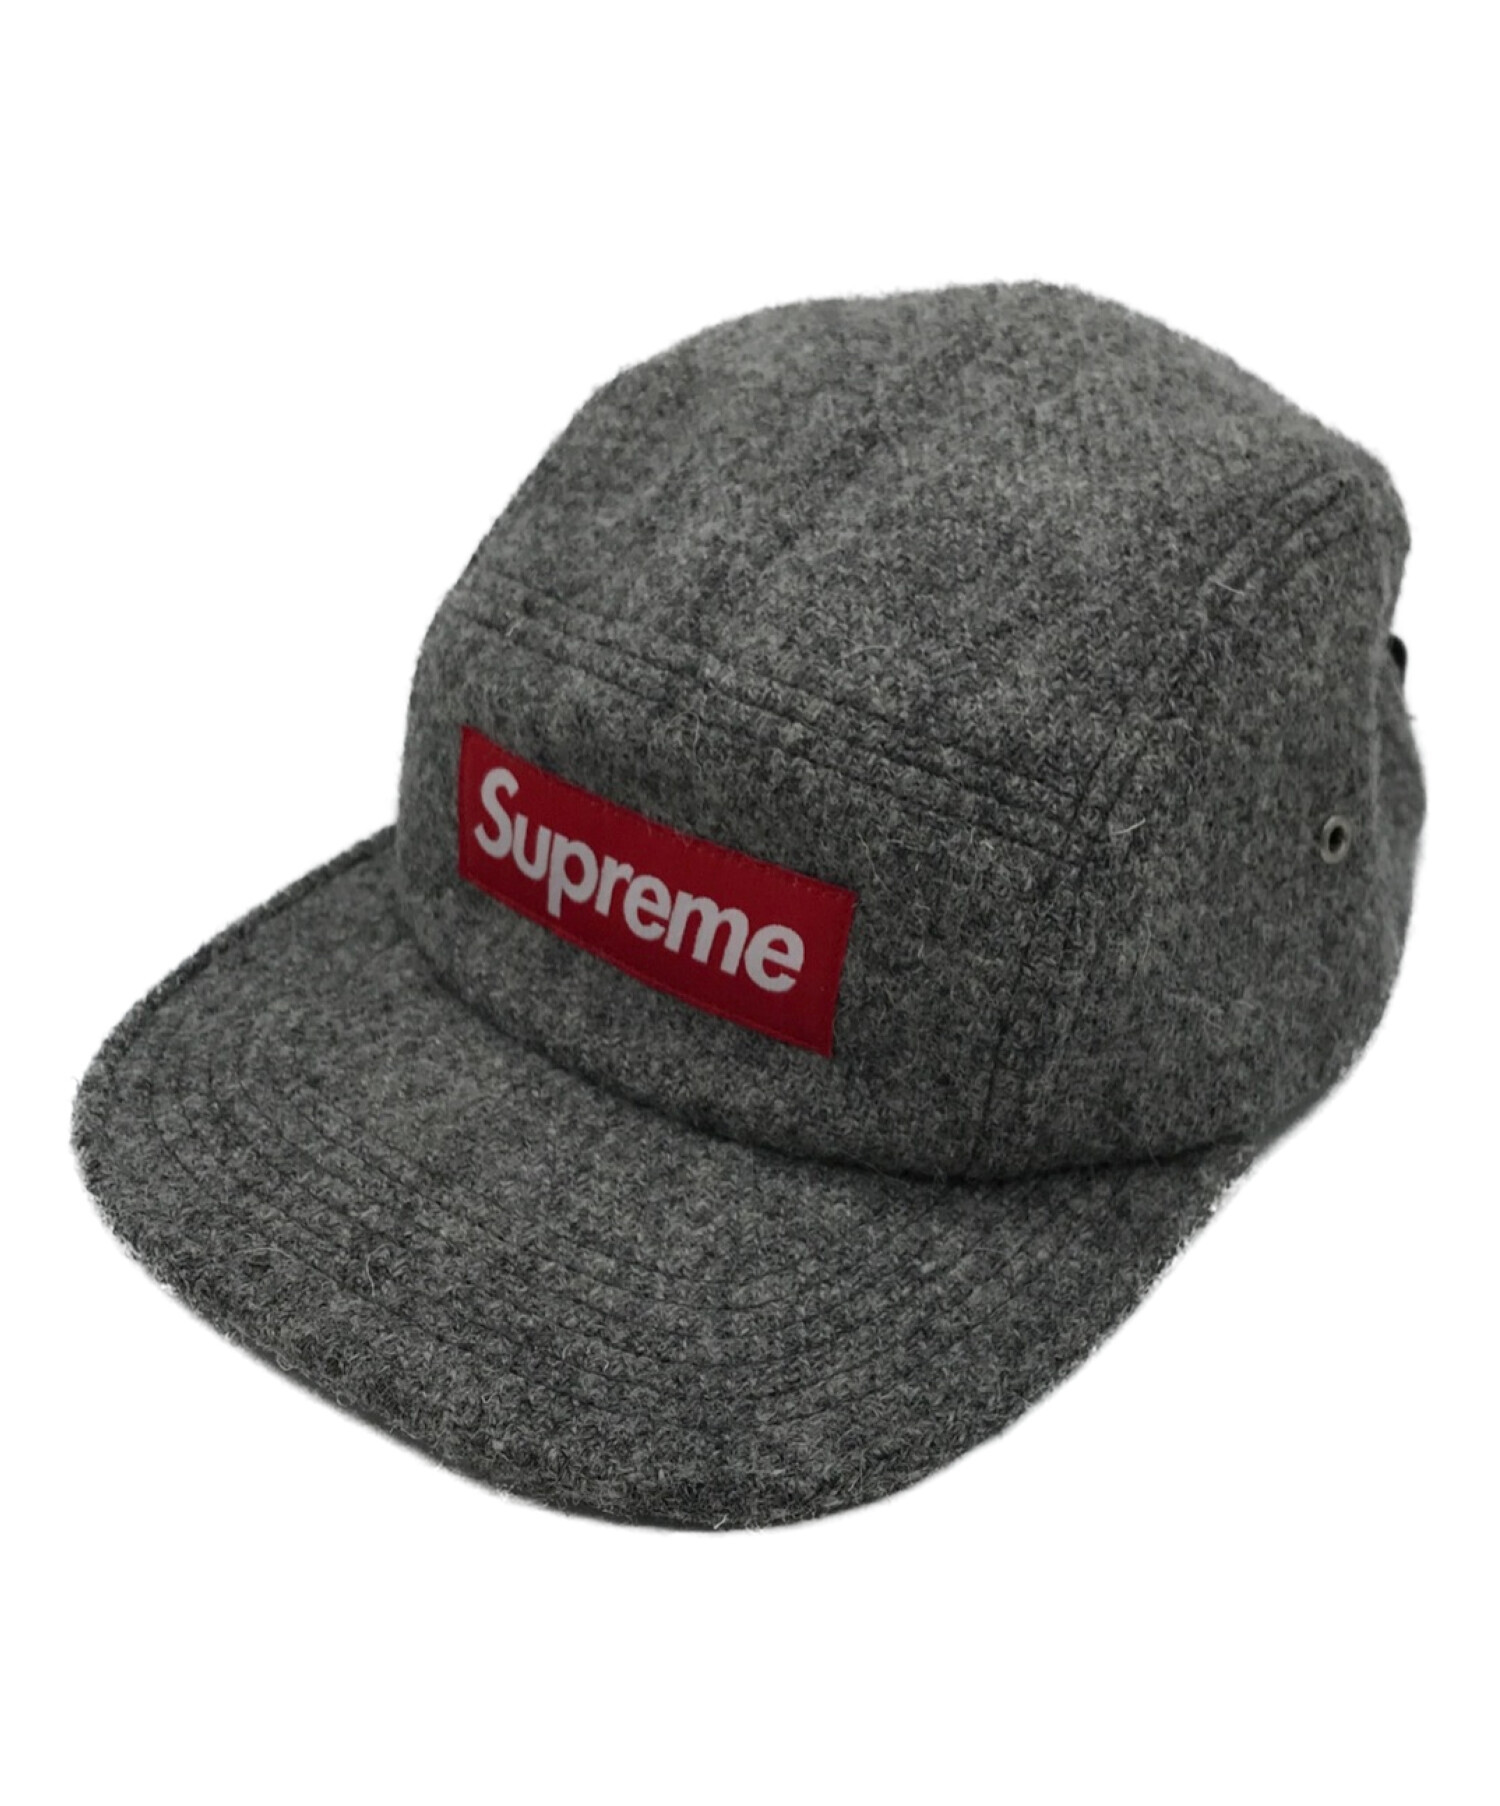 supreme harris tweed camp cap